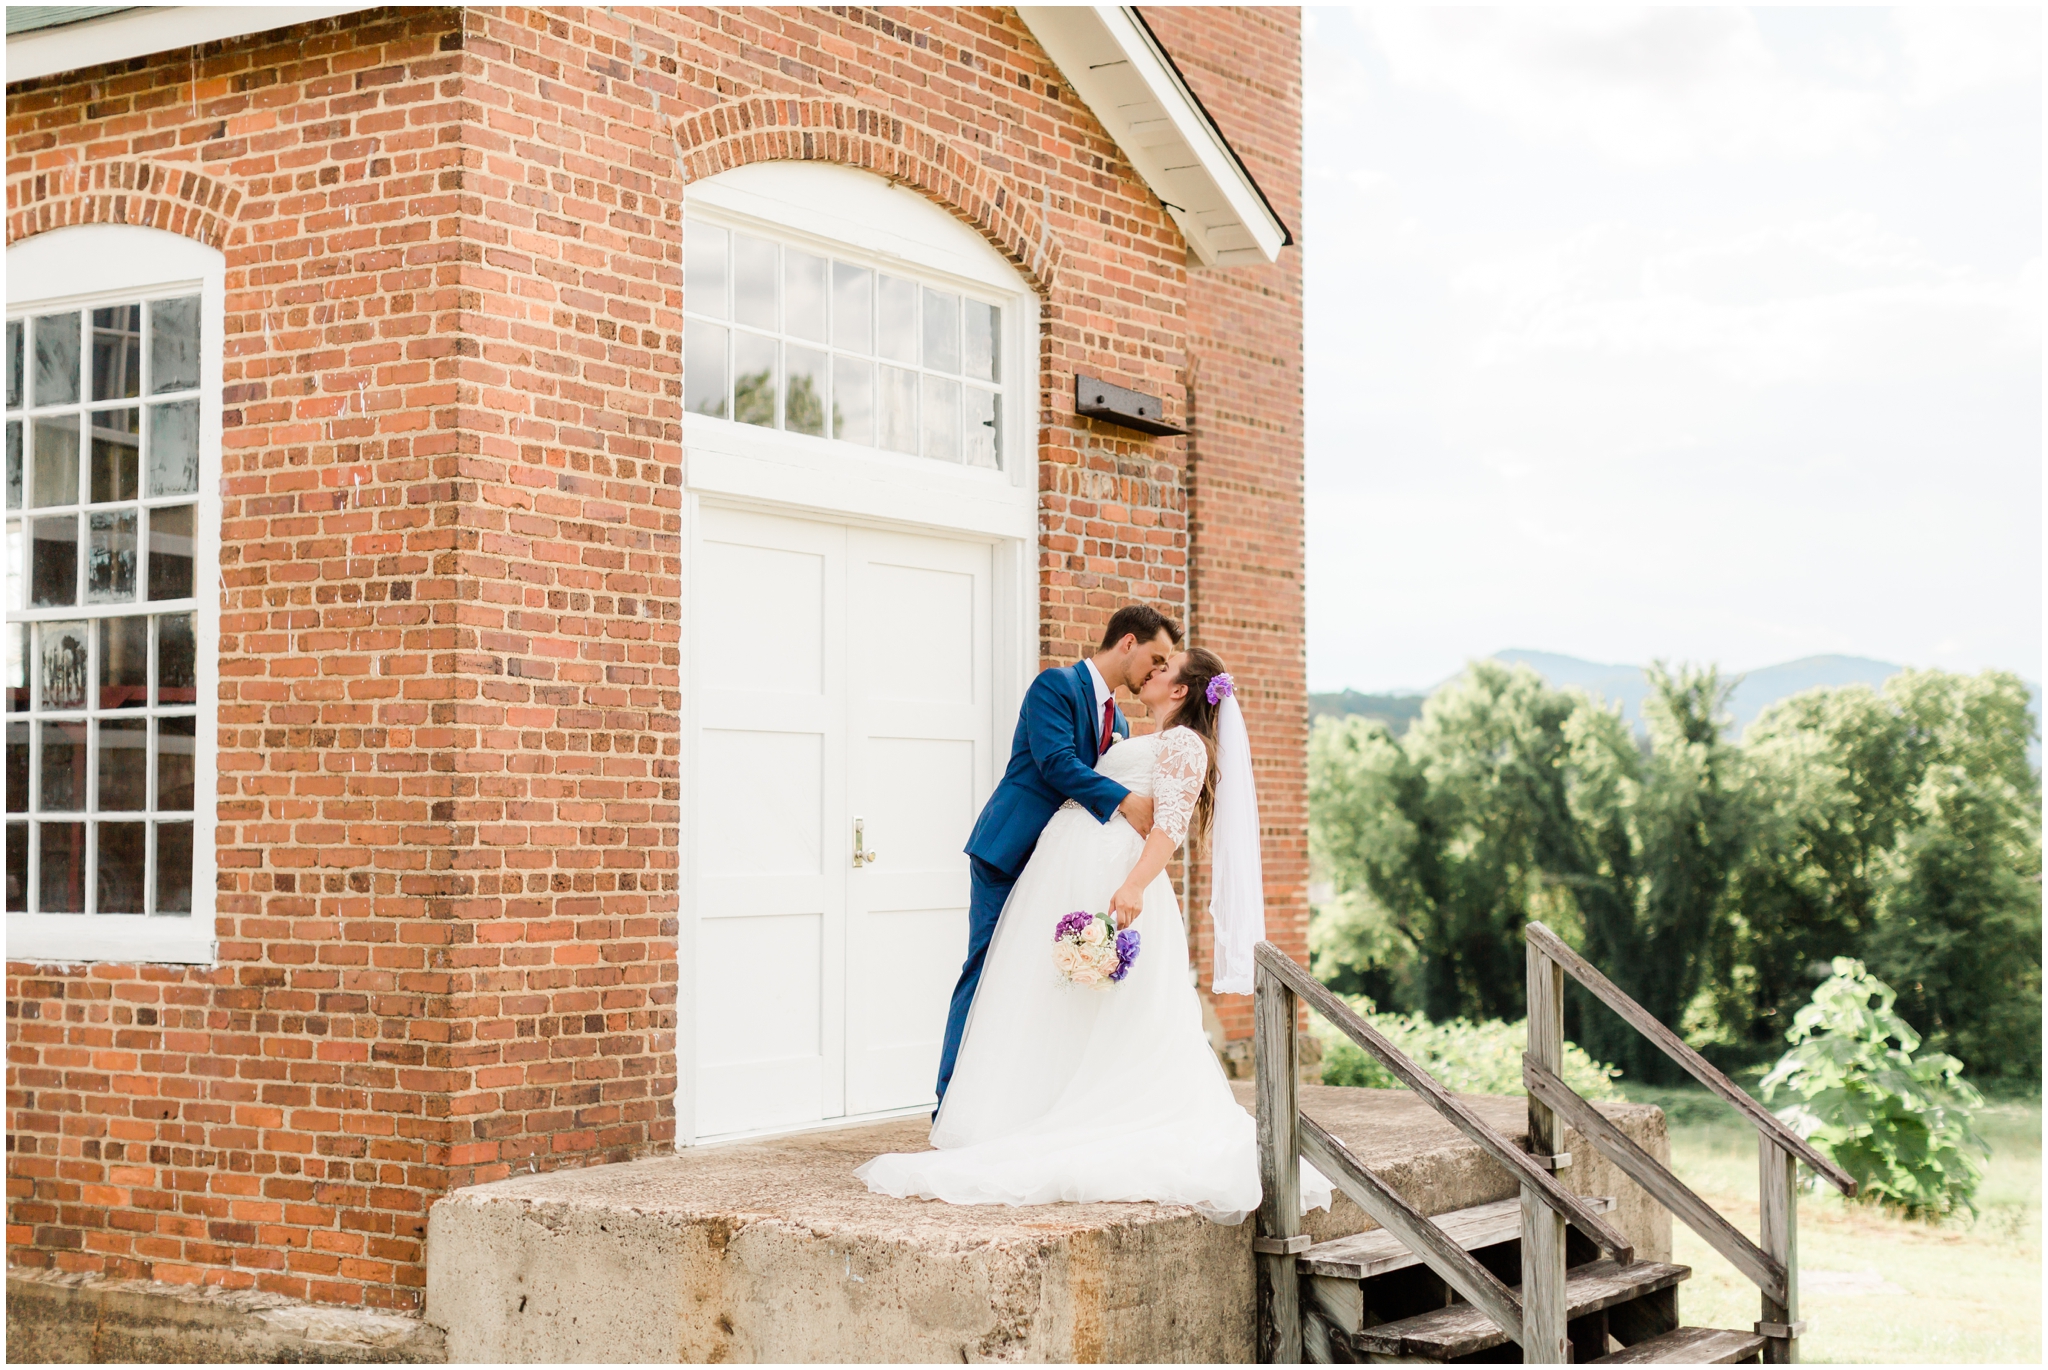 Blue Ridge Mountain Wedding Venue by alyssa rachelle photography